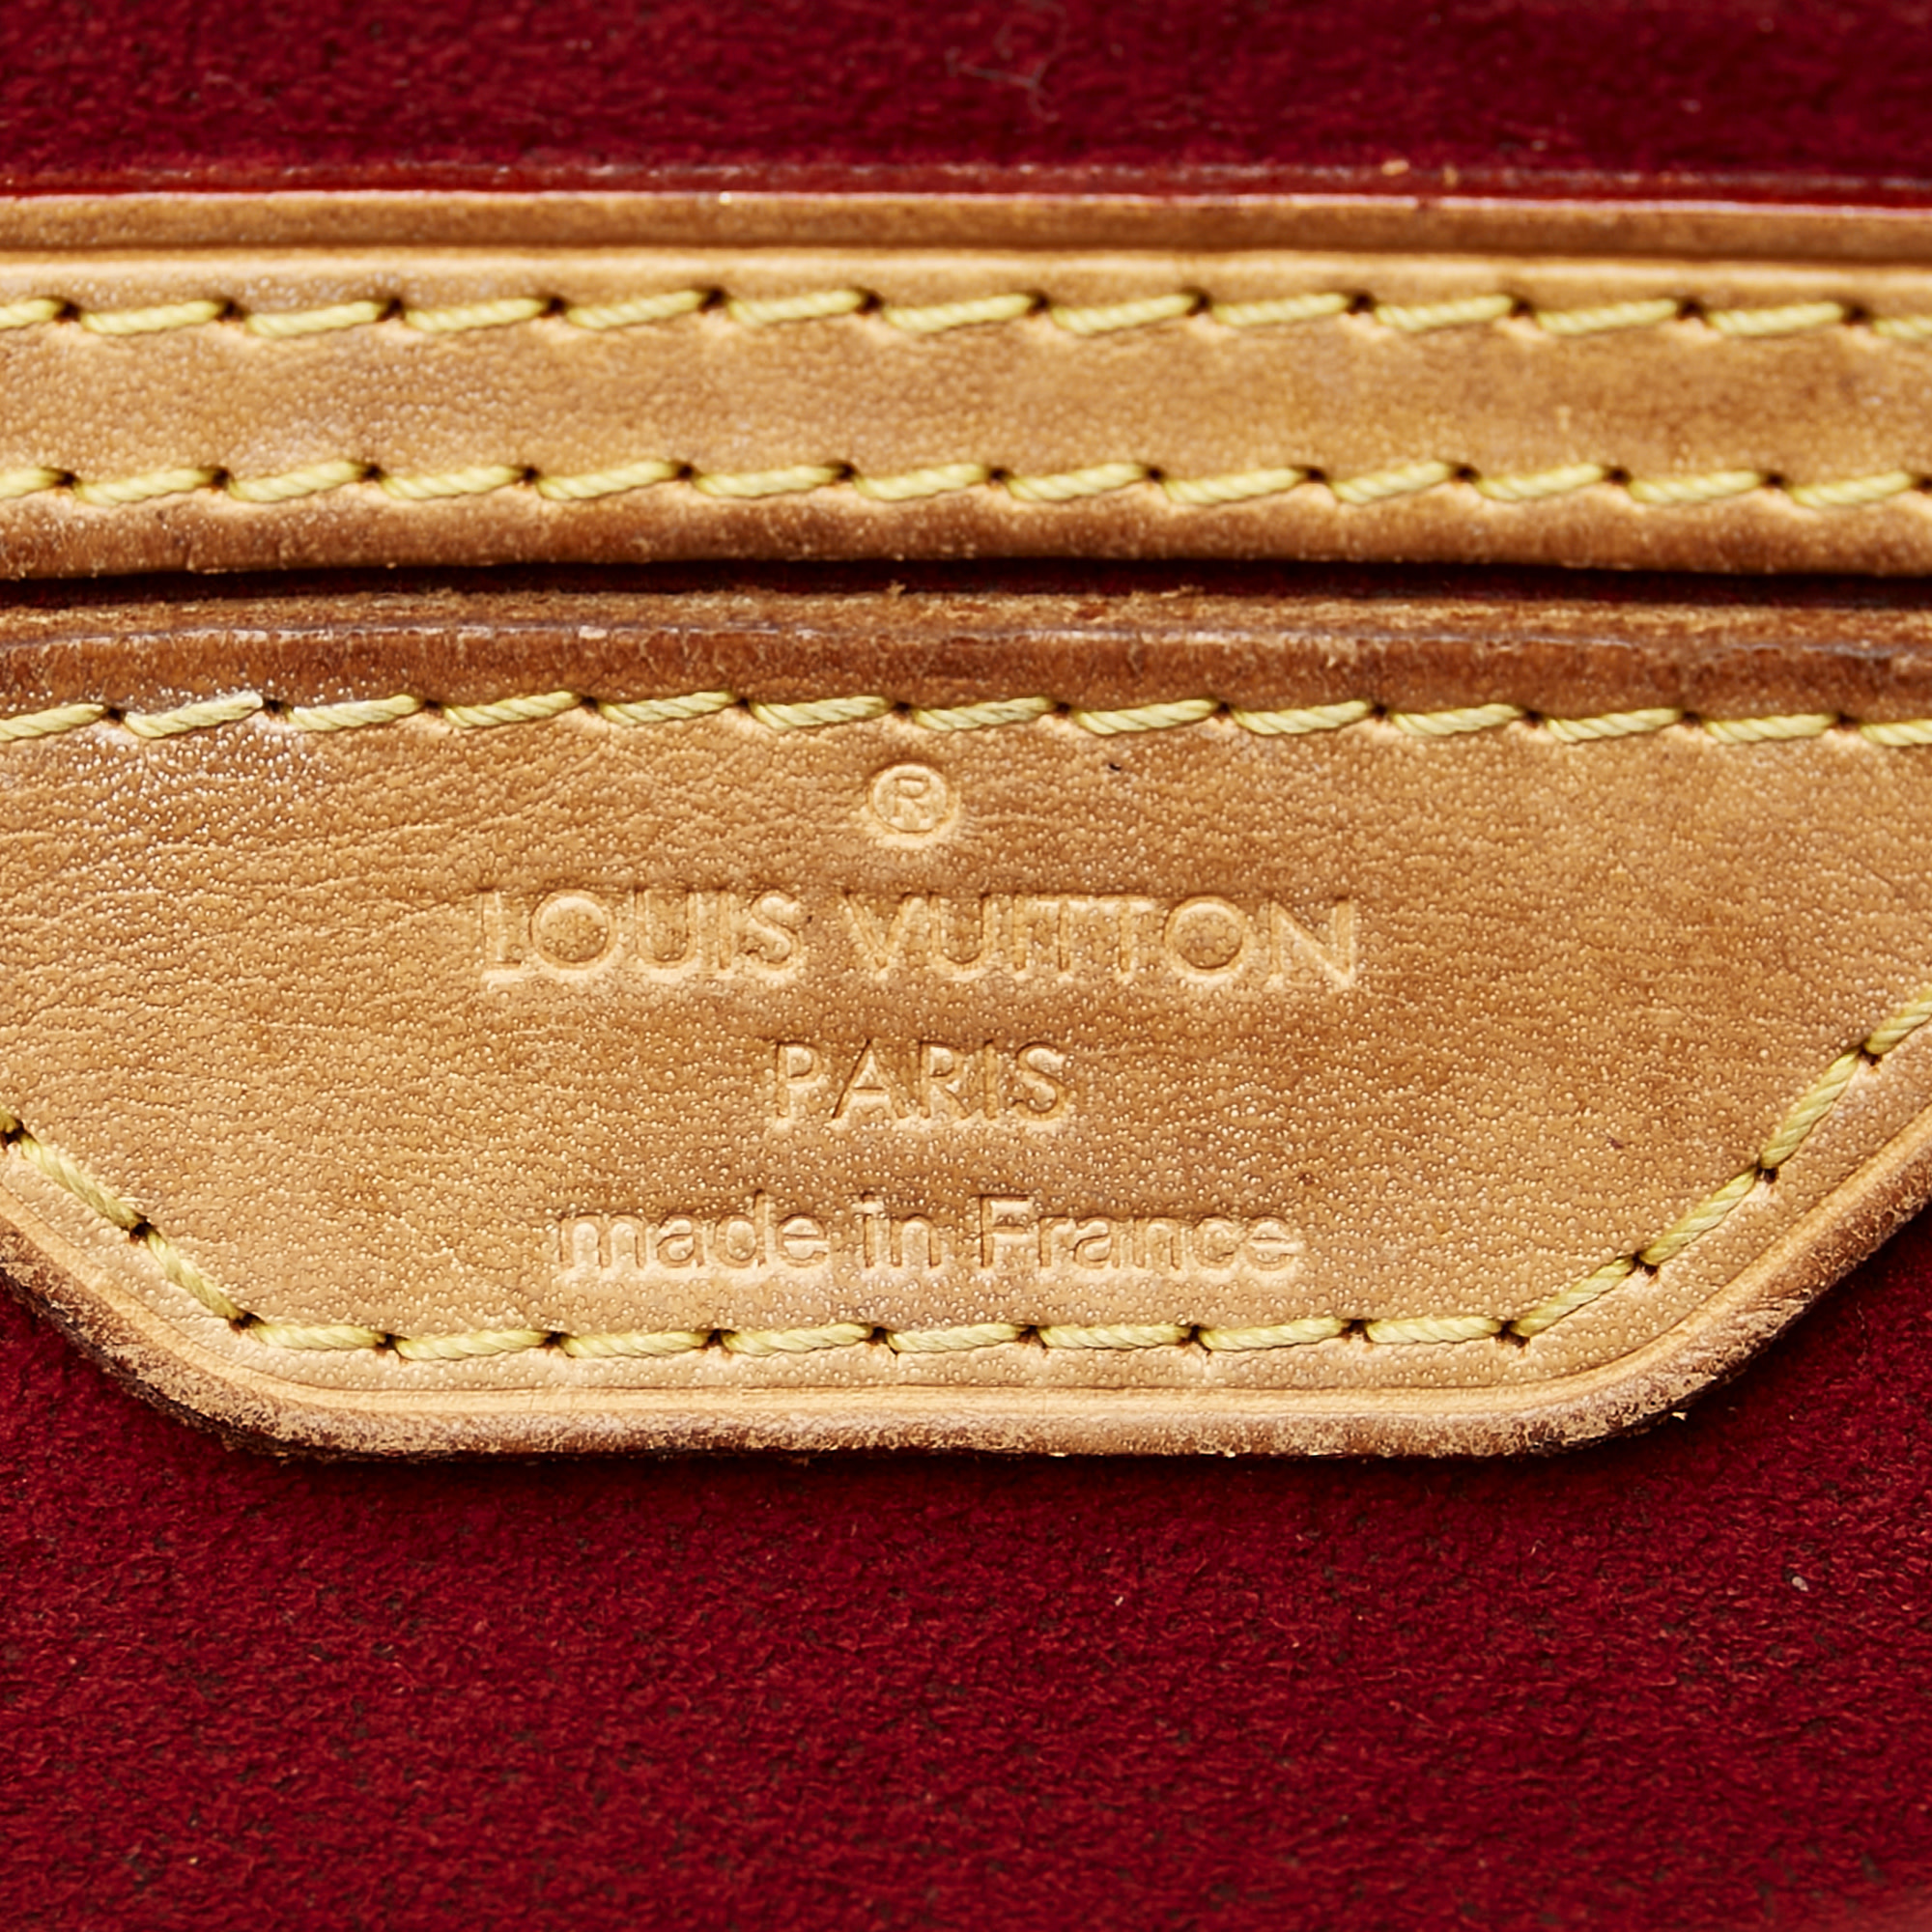 Louis Vuitton LOUIS VUITTON Marilyn oar shoulder bag handbag monogram  multicolor M40206